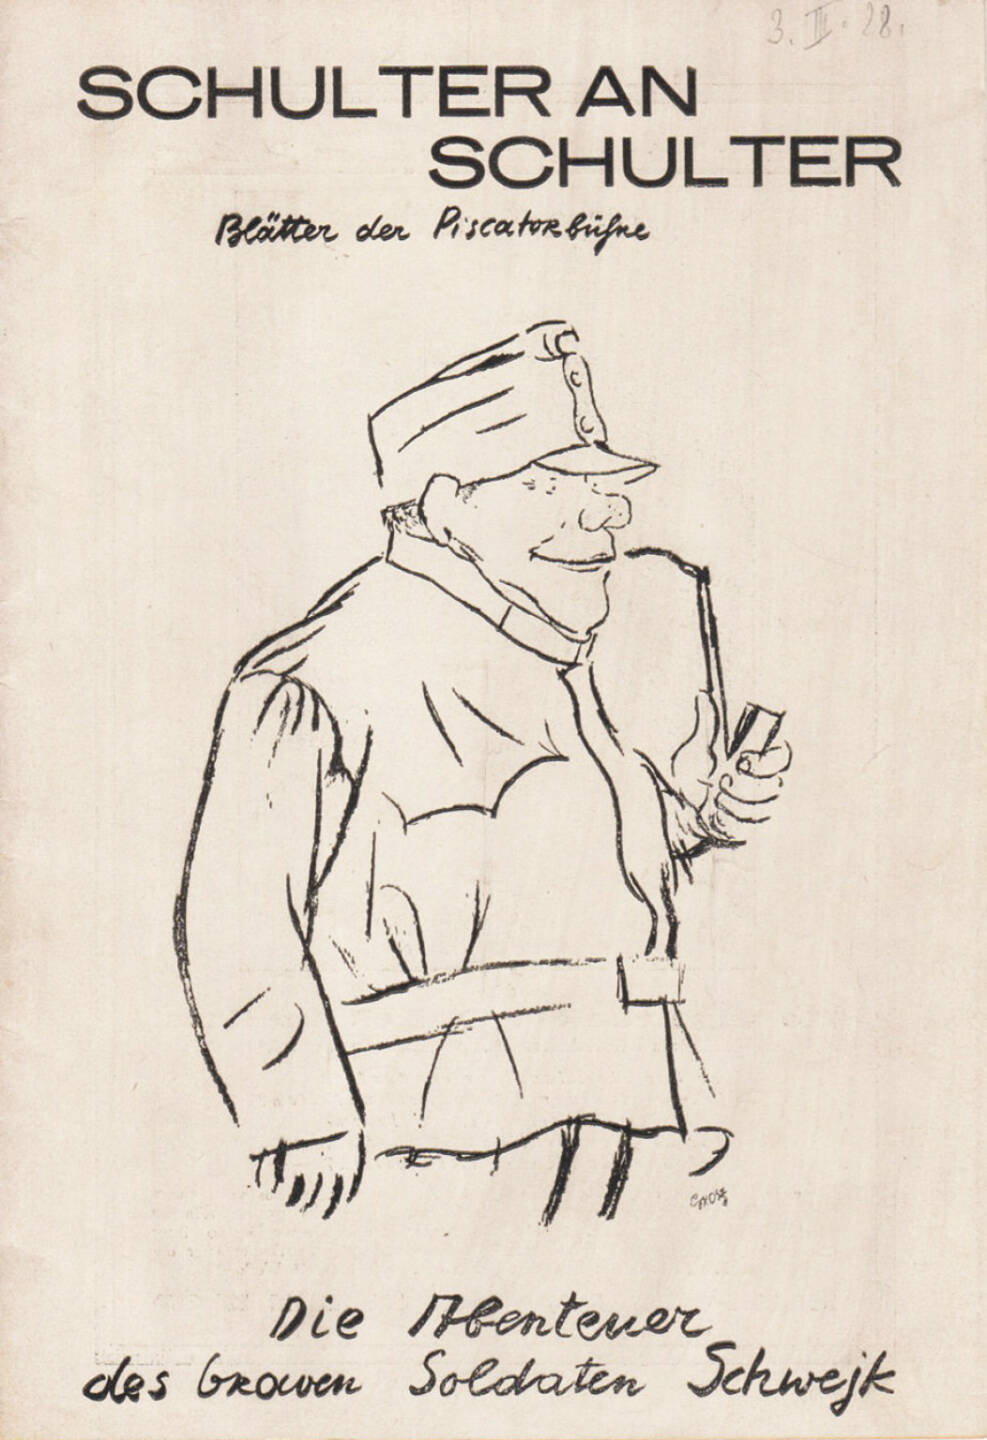 Blätter der Piscatorbühne - Schulter an Schulter, Bepa-Verlag 1928, Cover - http://josefchladek.com/book/blatter_der_piscatorbuhne_-_schulter_an_schulter